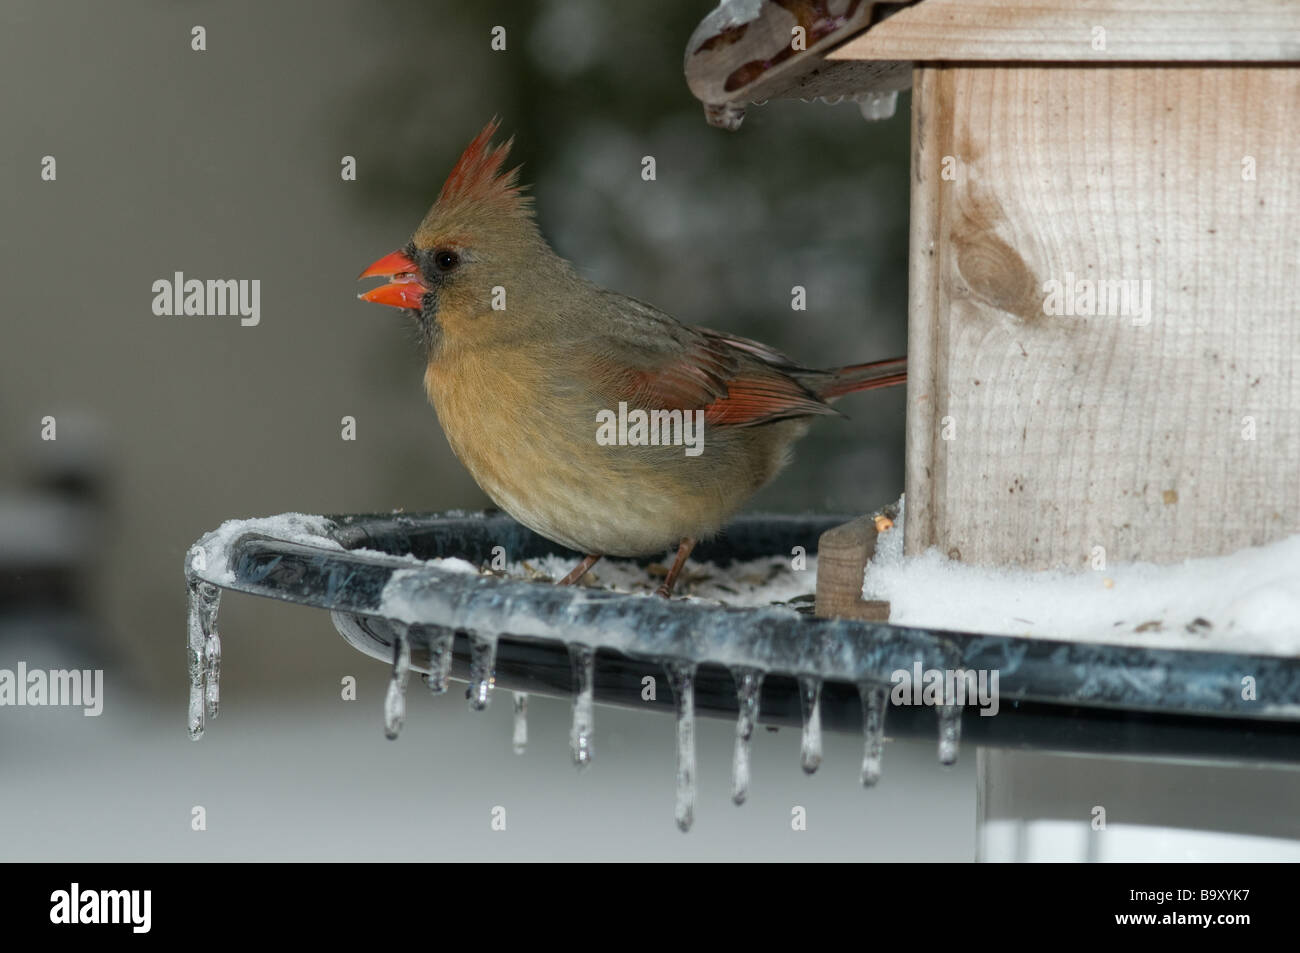 Cardinal Red Bird in Futterstation Stockfoto